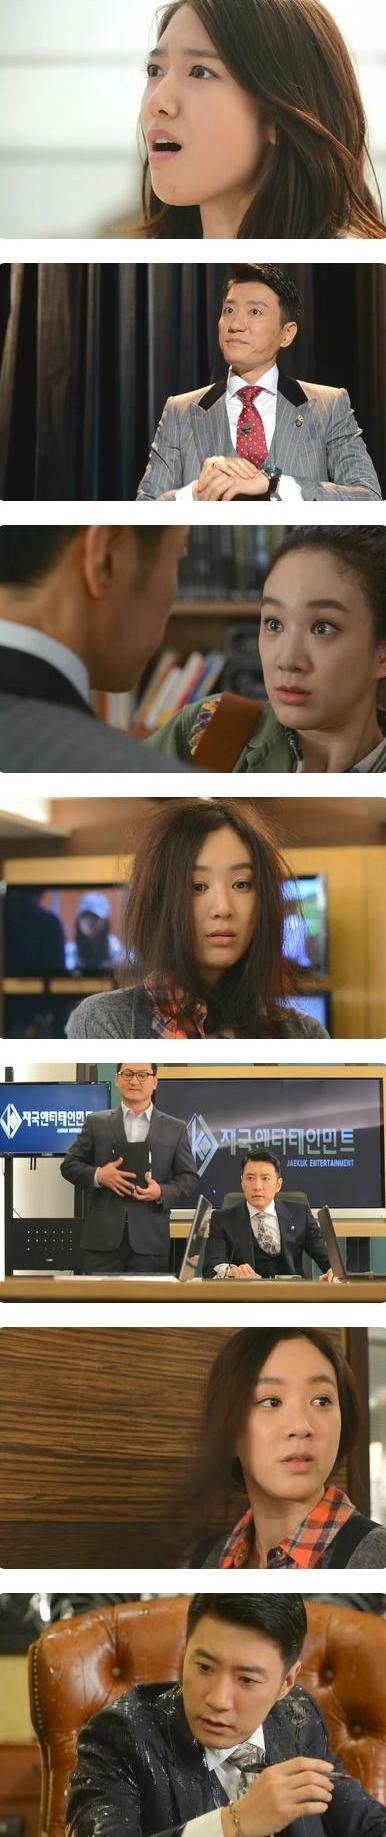 episode 1 captures for the Korean drama 'The King of Dramas'